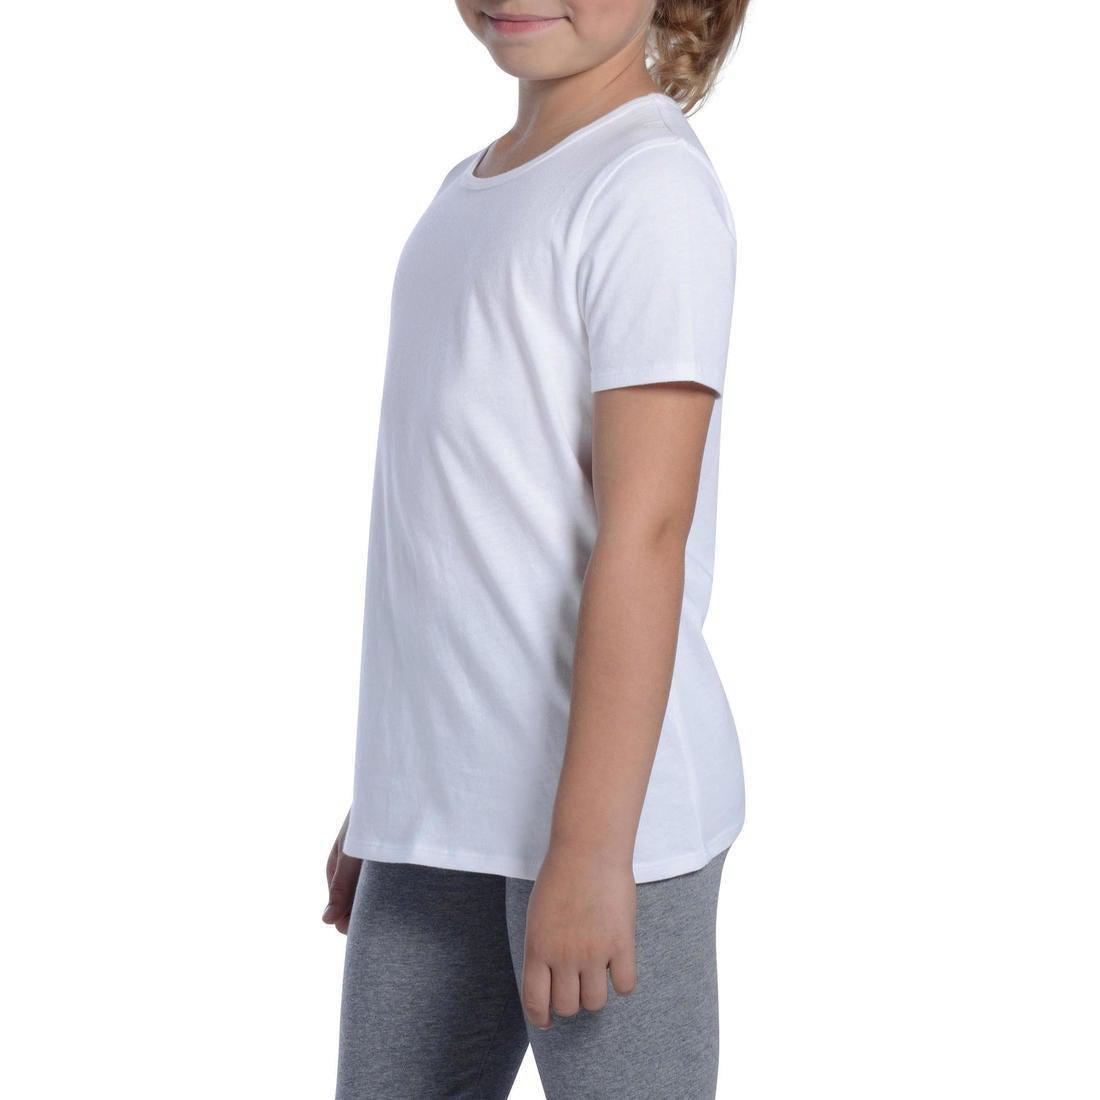 DOMYOS - Kids' Basic Cotton T-Shirt-White